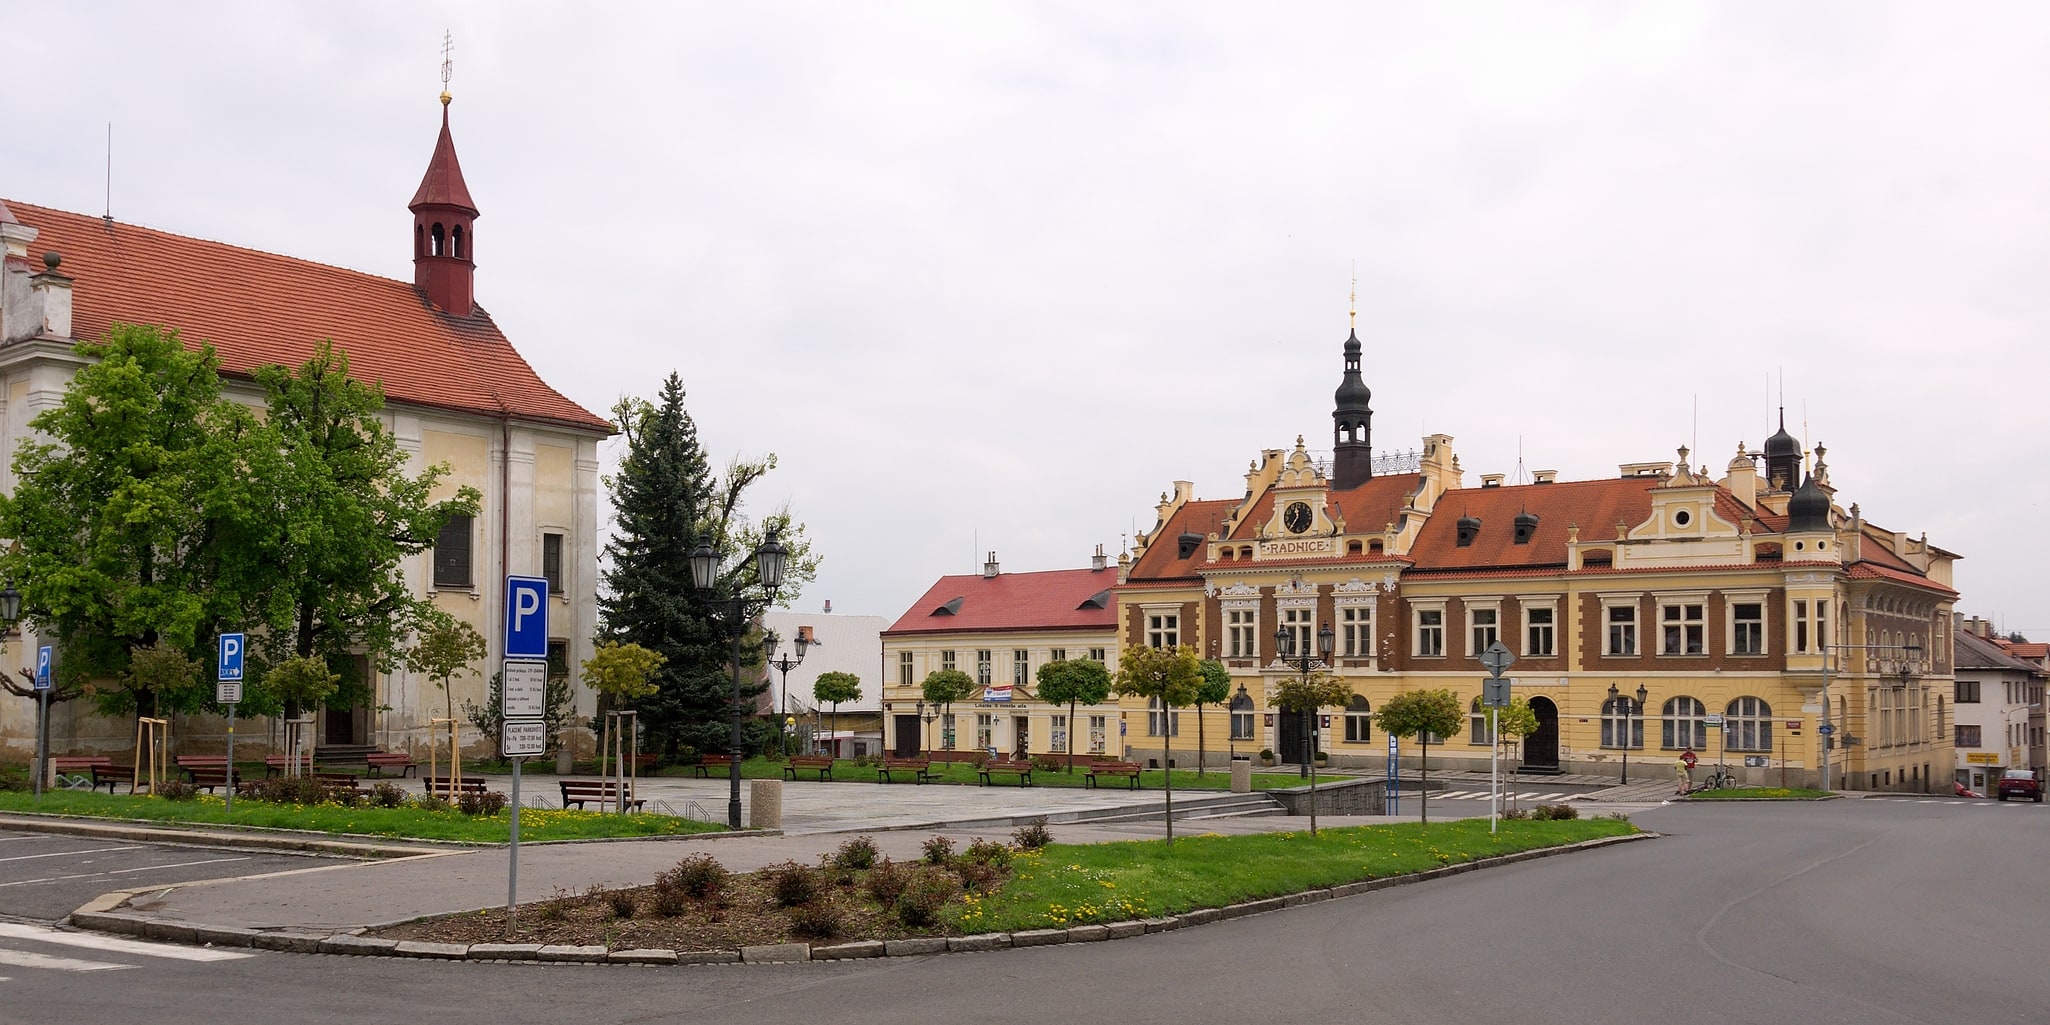 Hořovice, Czechy